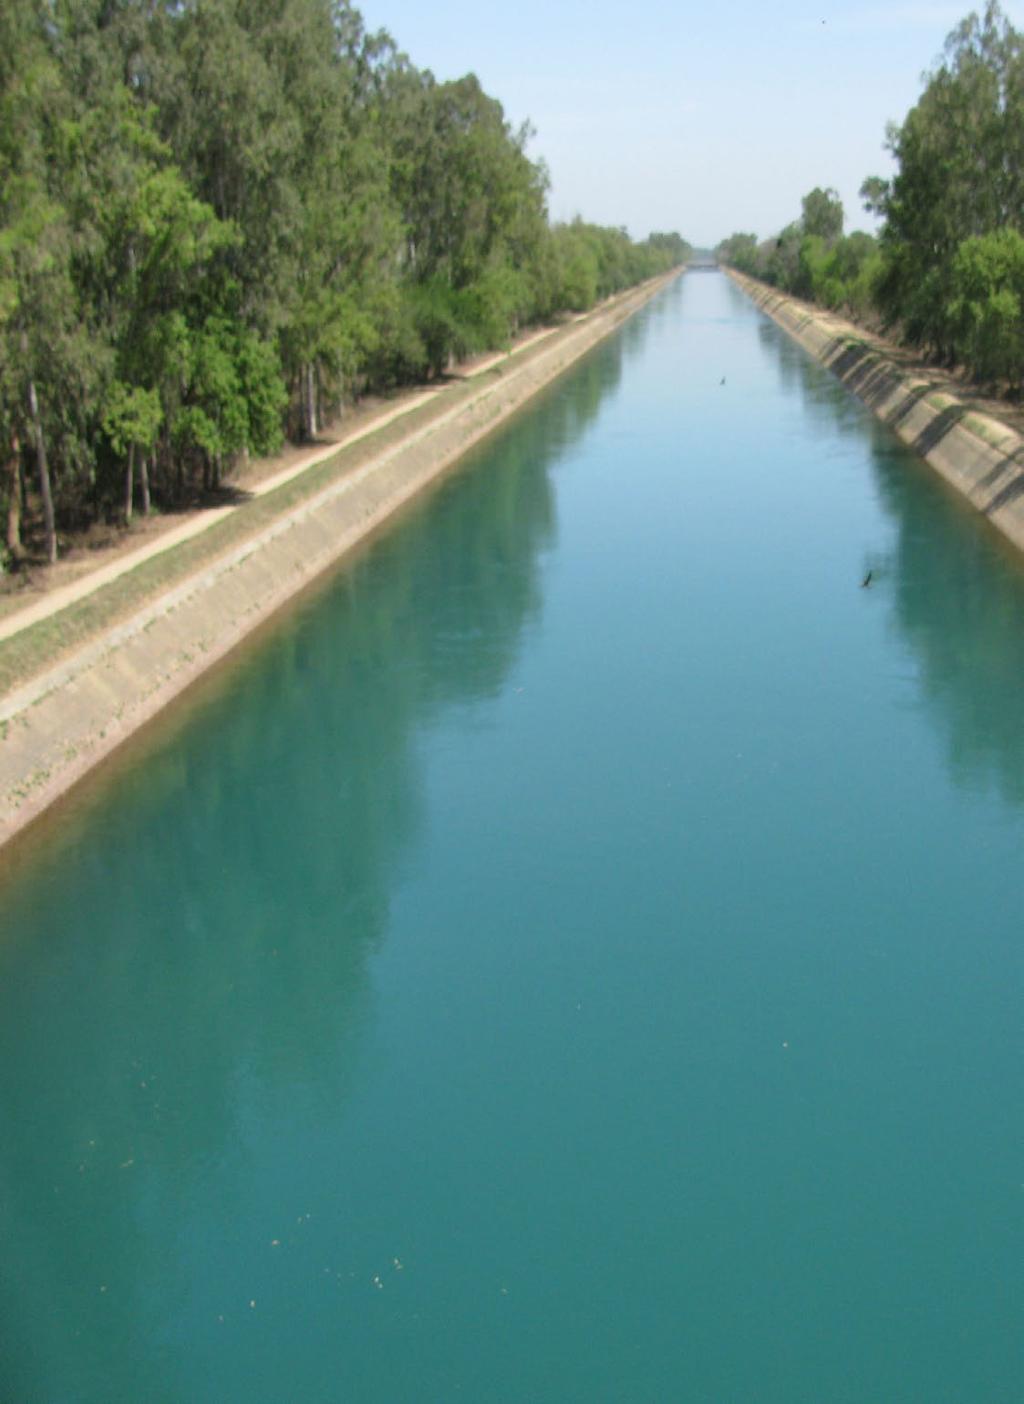 Photo credits: Zenit, Bhakra Main Canal in Punjab